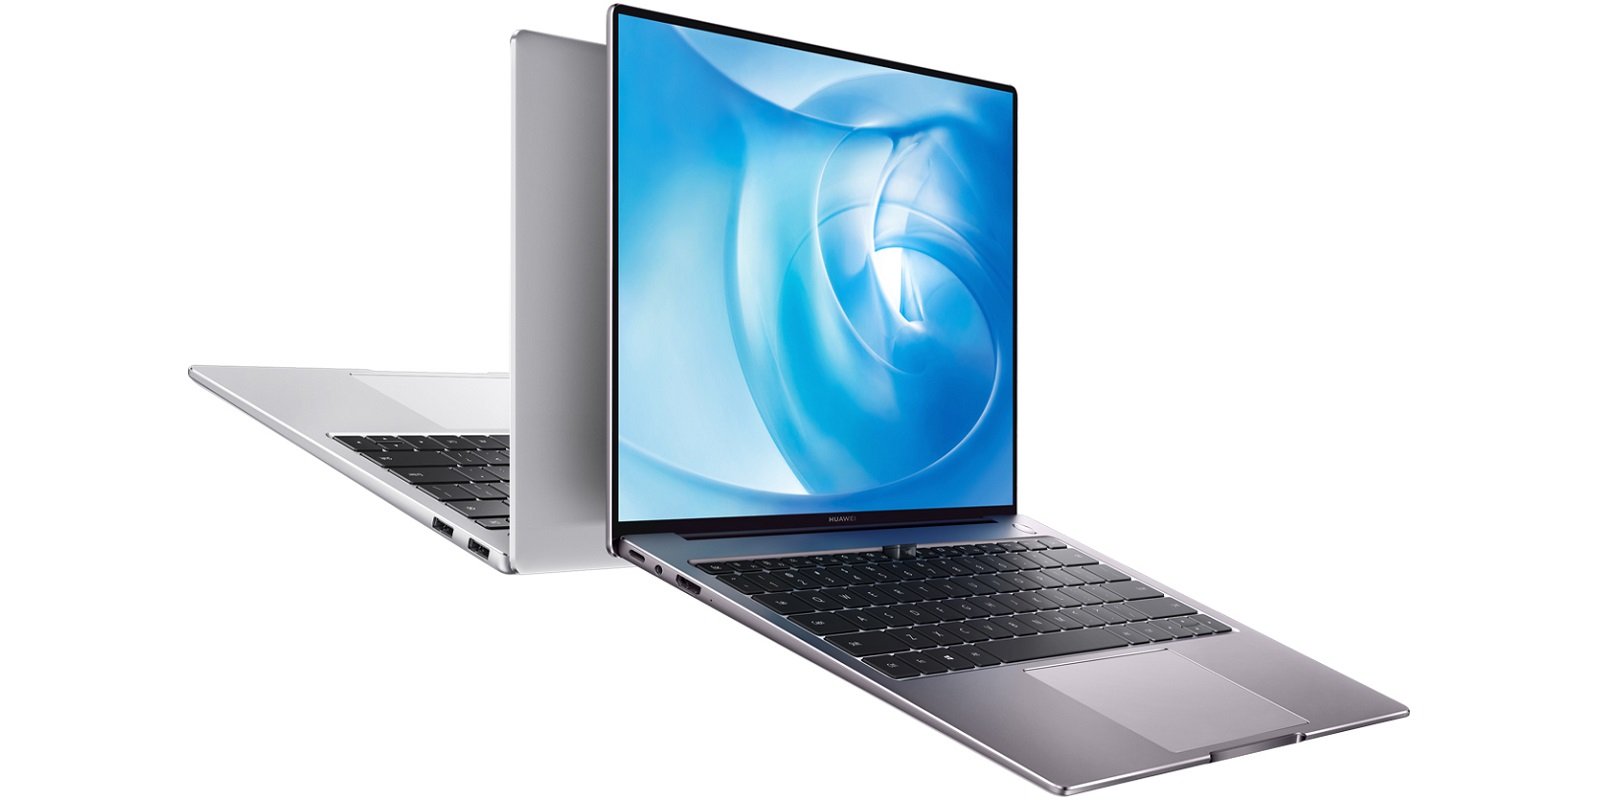 Huawei MateBook 14 2020 AMD Ryzen 4000 laptop